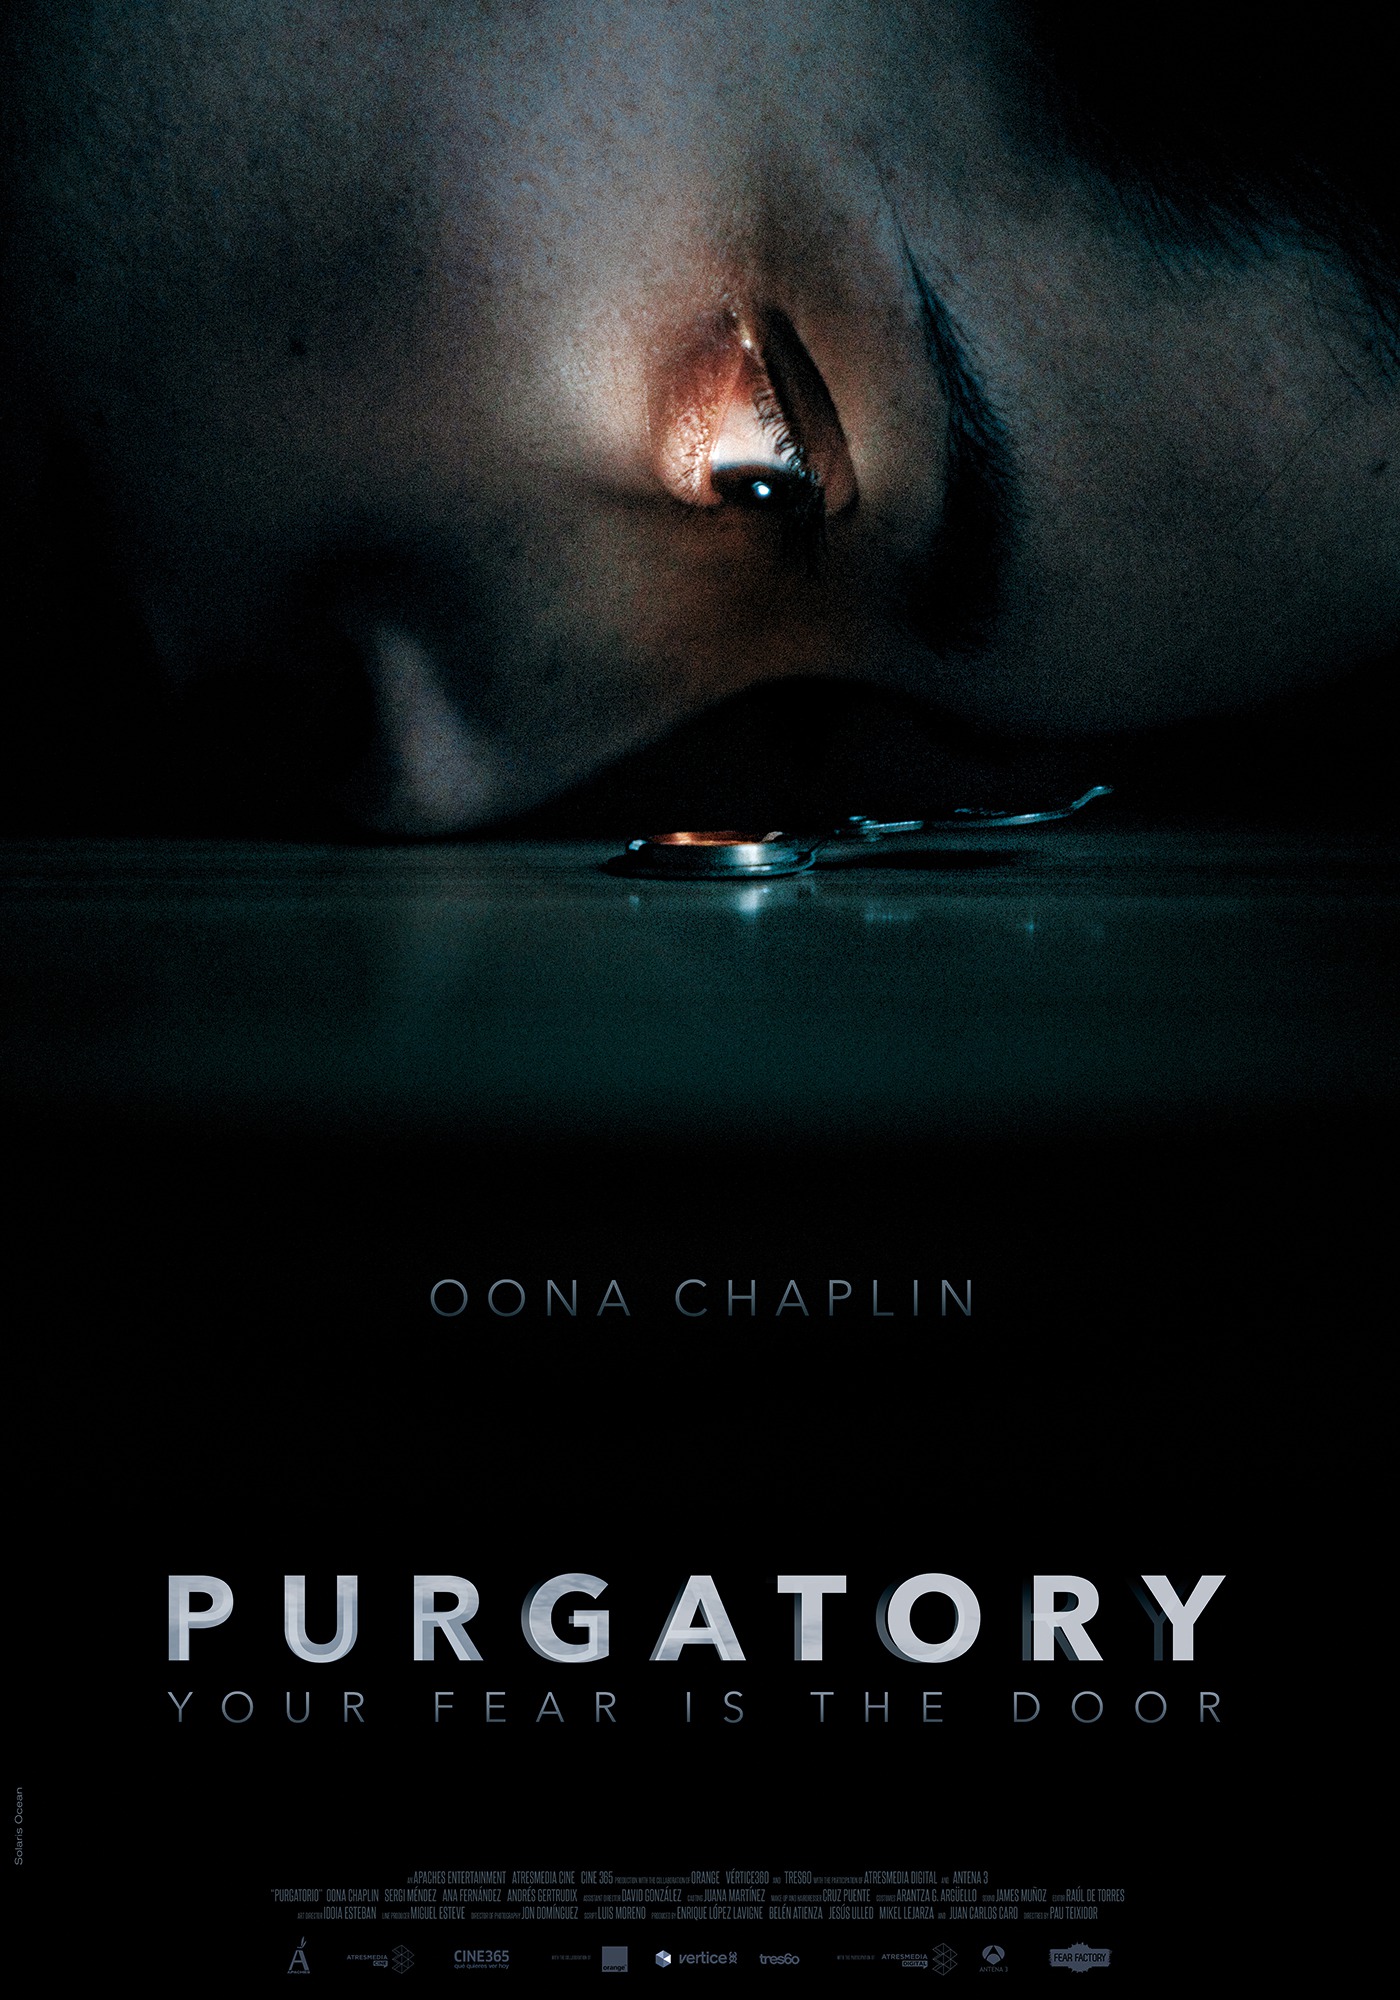 Mega Sized Movie Poster Image for Purgatorio (#2 of 2)